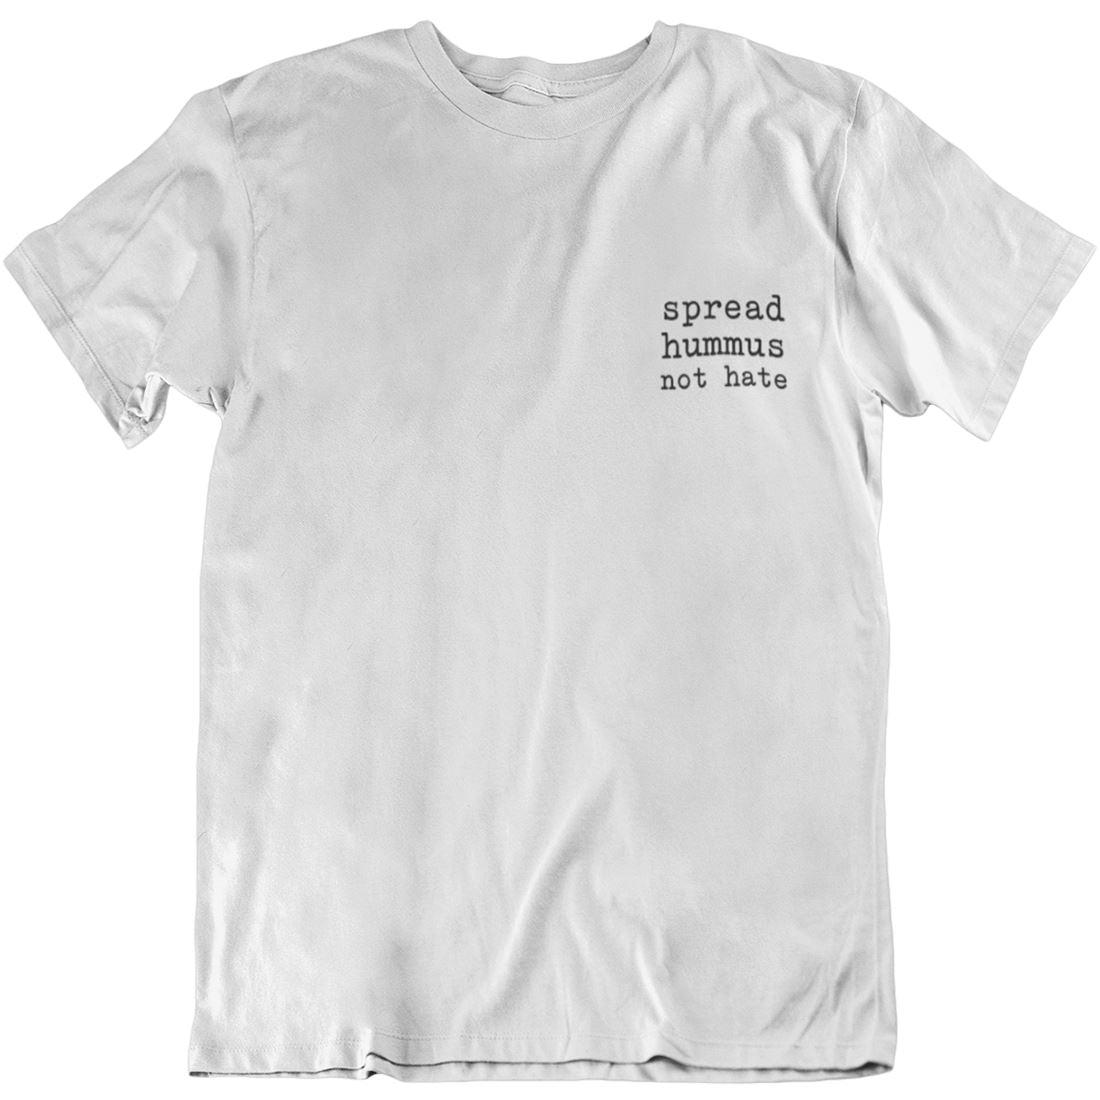 Spread hummus not hate - Unisex Organic Shirt - Team Vegan © vegan t shirt